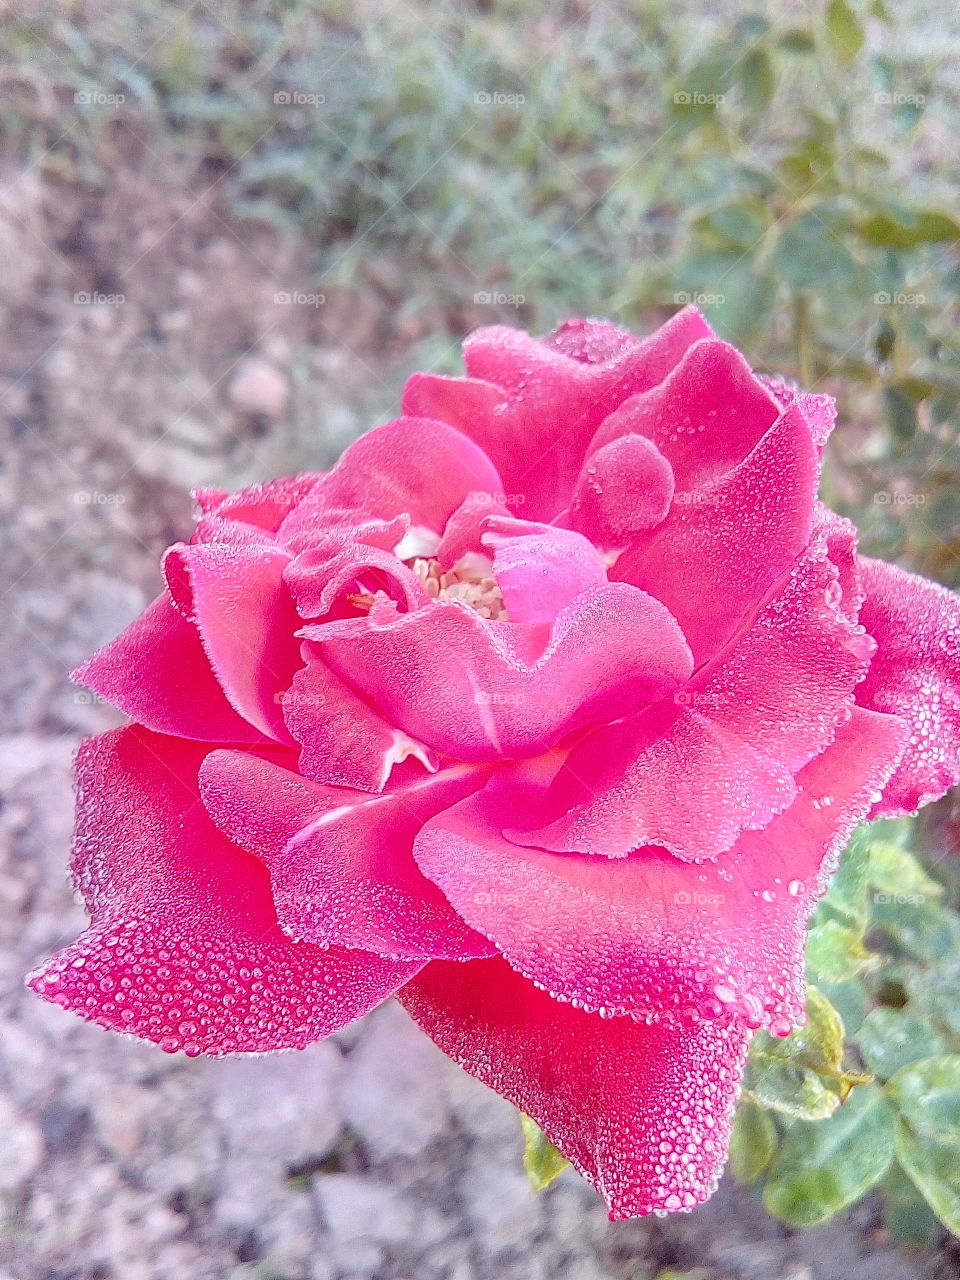 Rose flowers